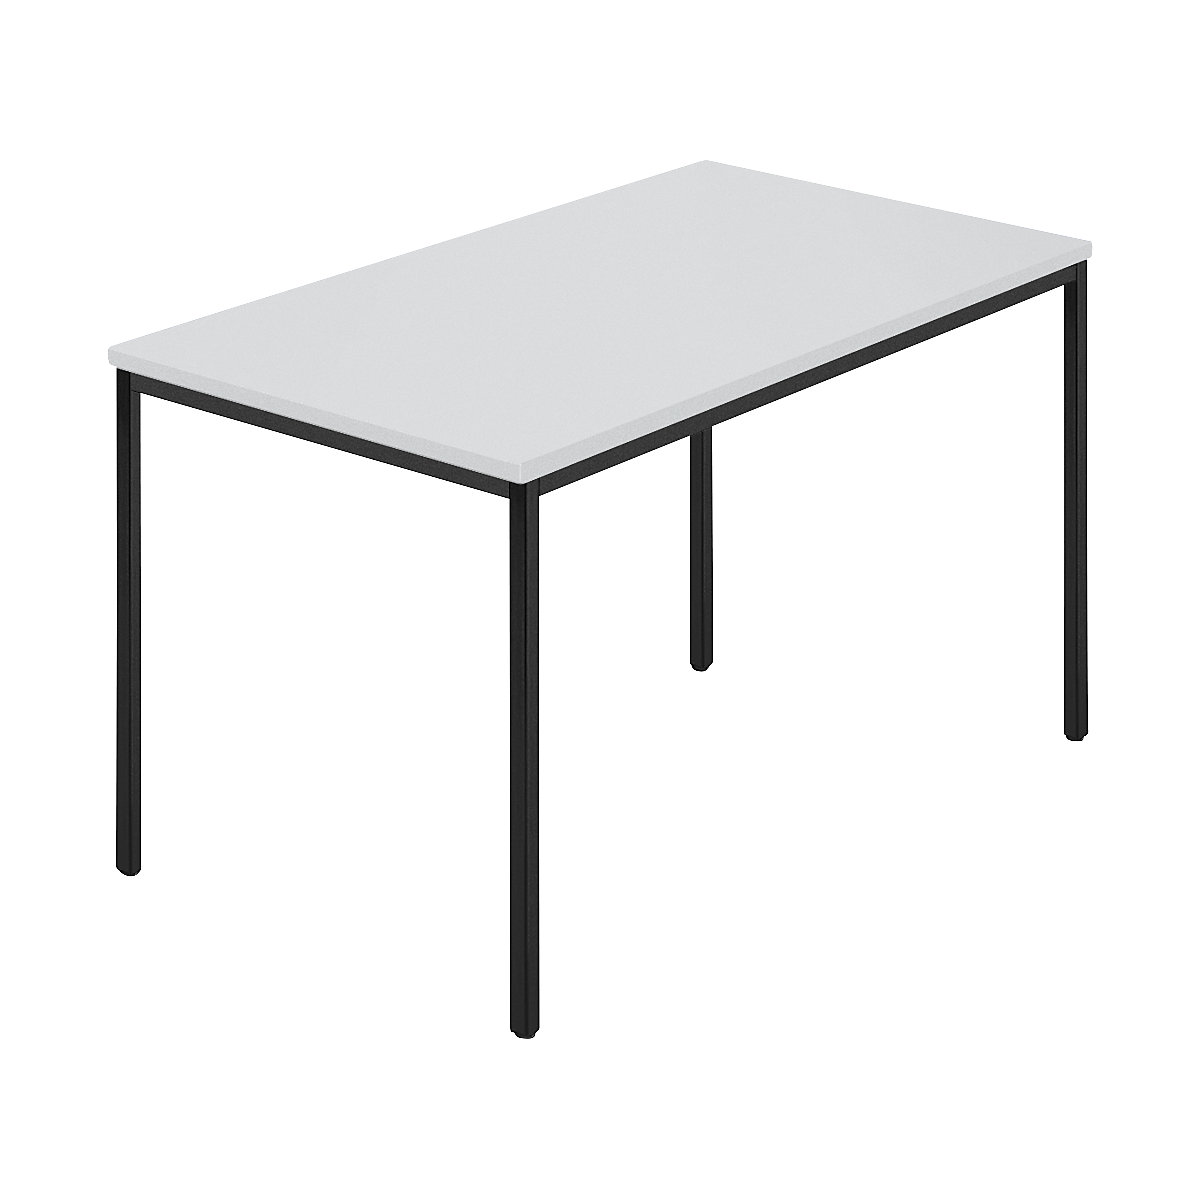 Rectangular table, coated rectangular tubing